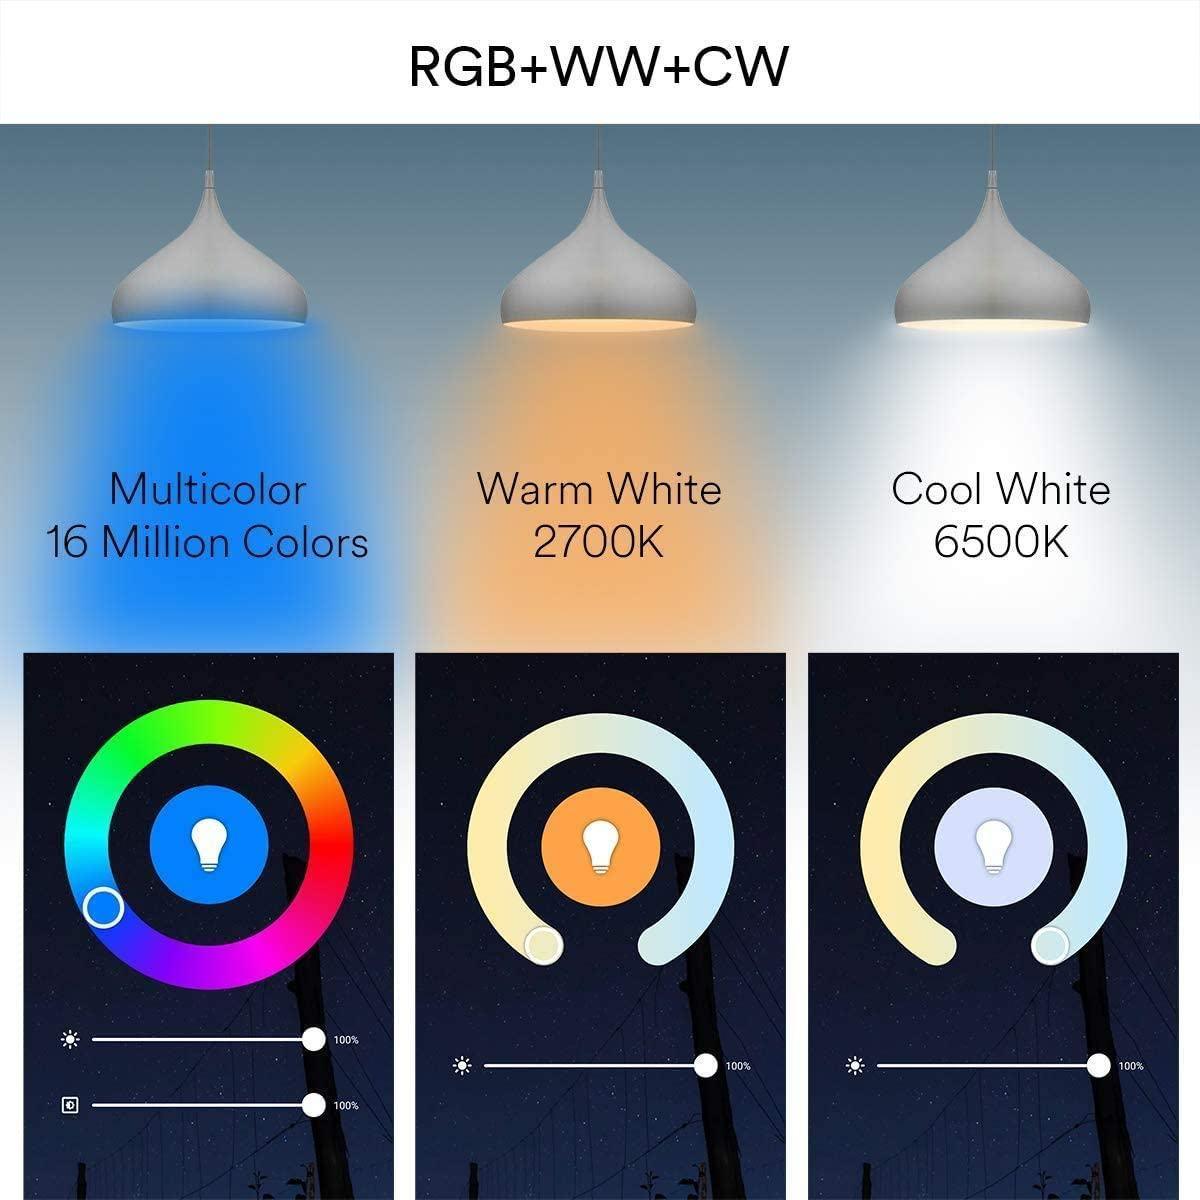 RGBAI Smart WiFi Bulb - Lumary